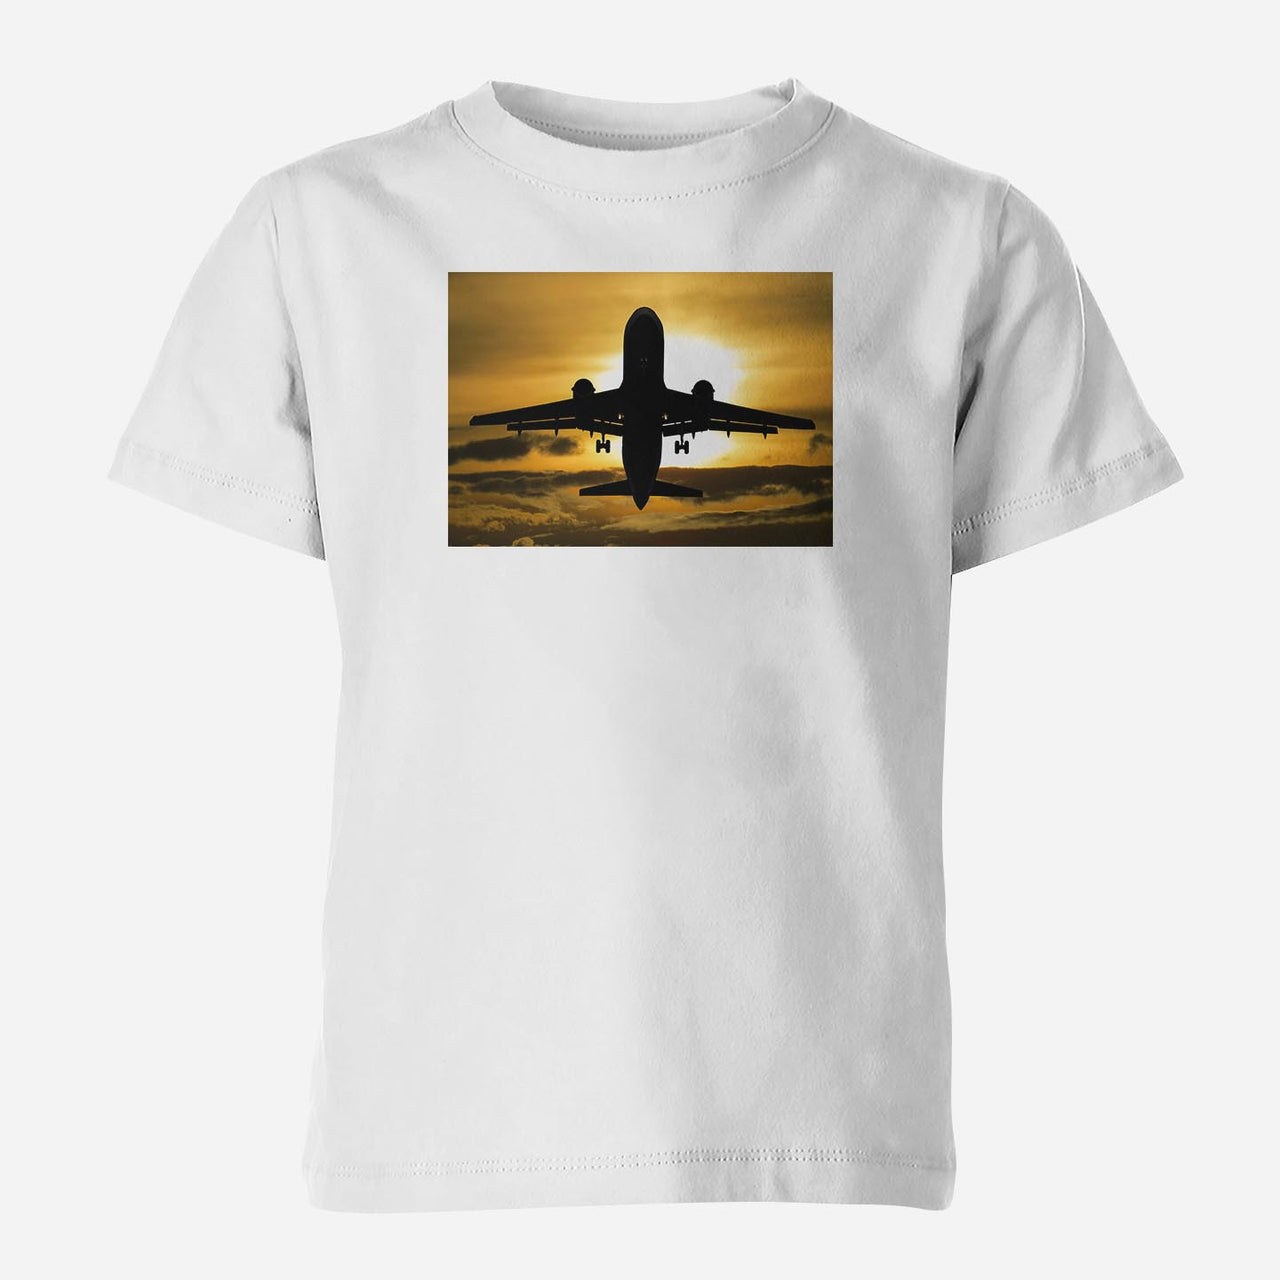 Departing Passanger Jet During Sunset Designed Children T-Shirts